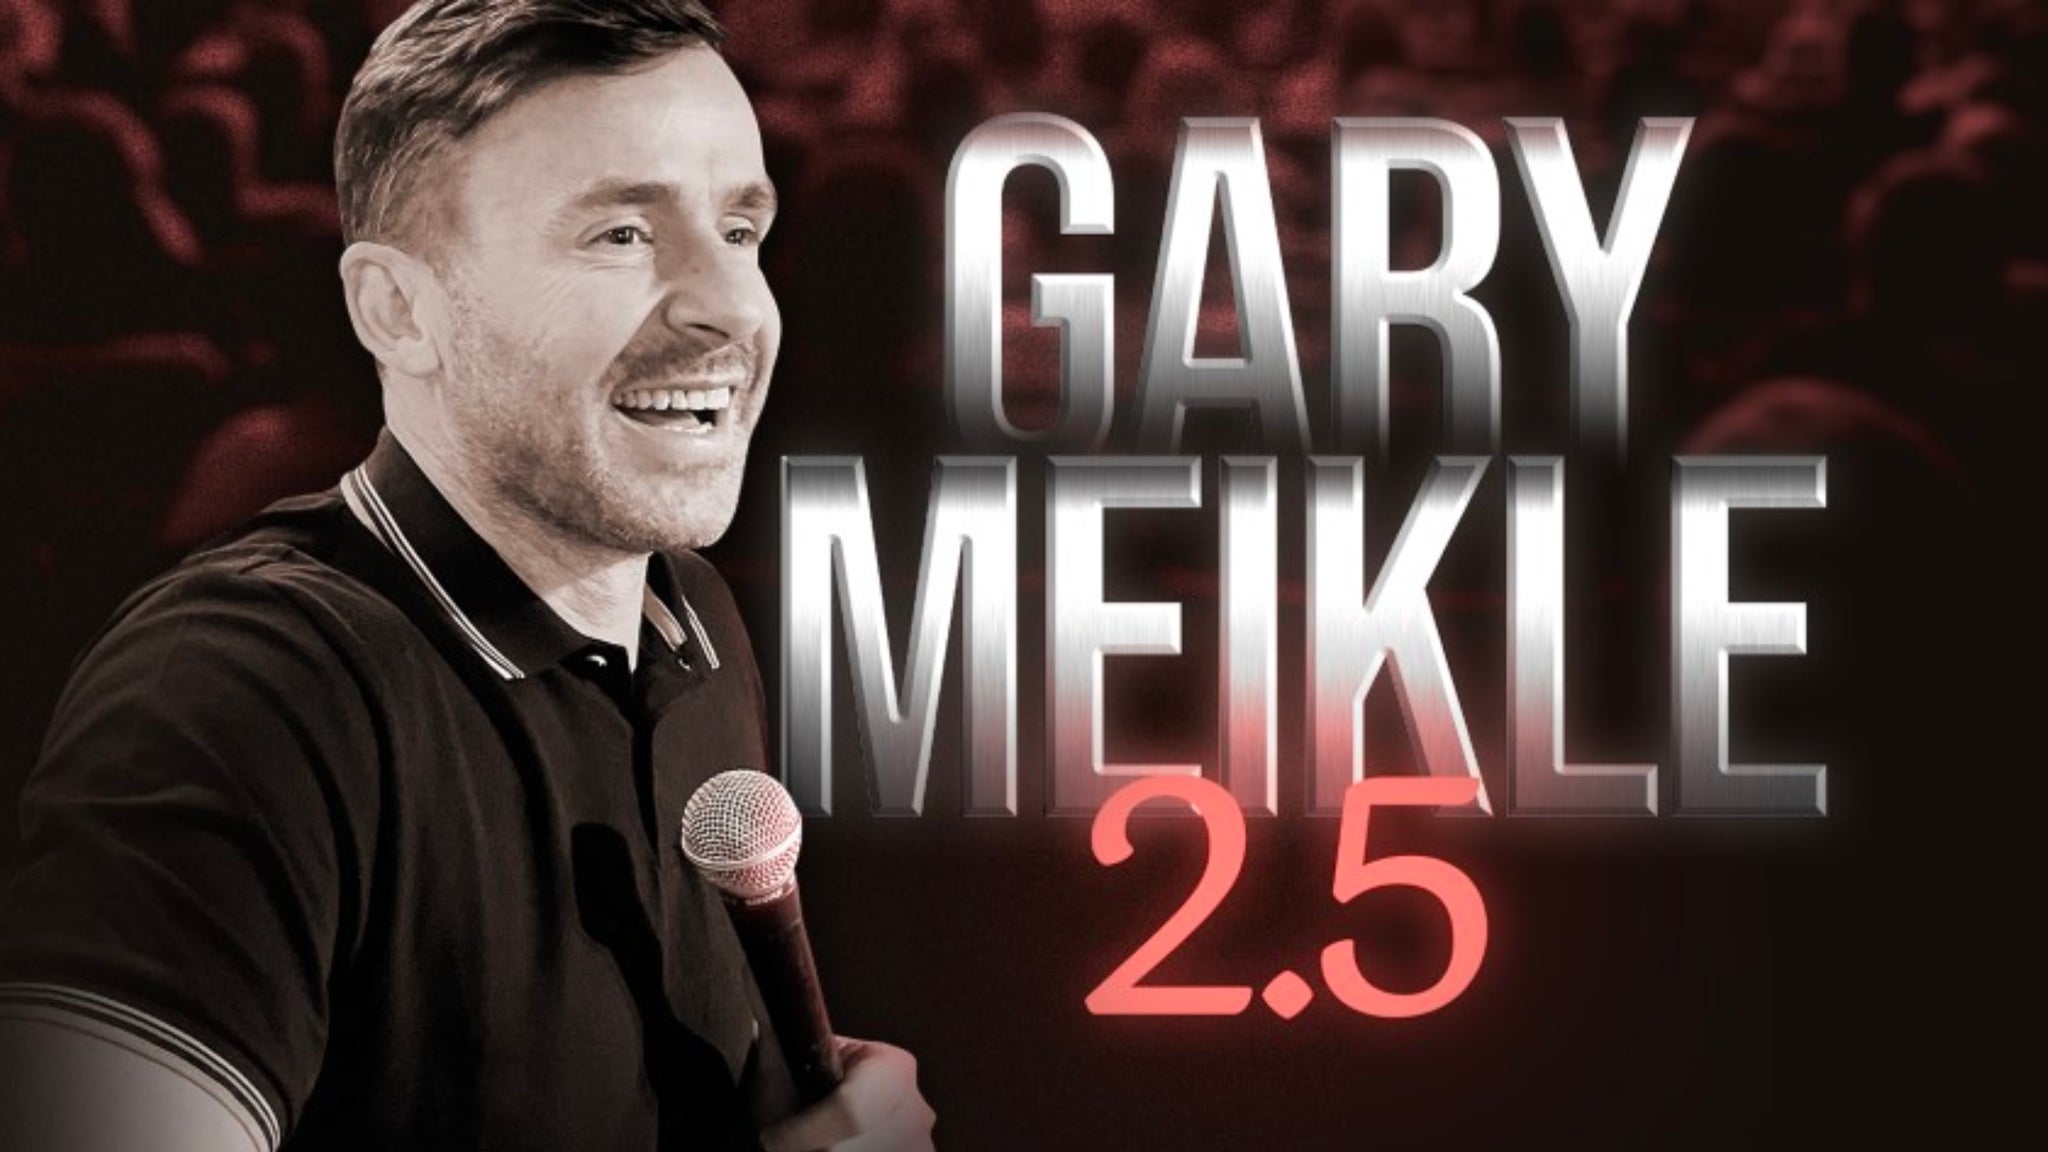 Gary Meikle 2.5 at The Denver Comedy Lounge - Denver, CO 80205